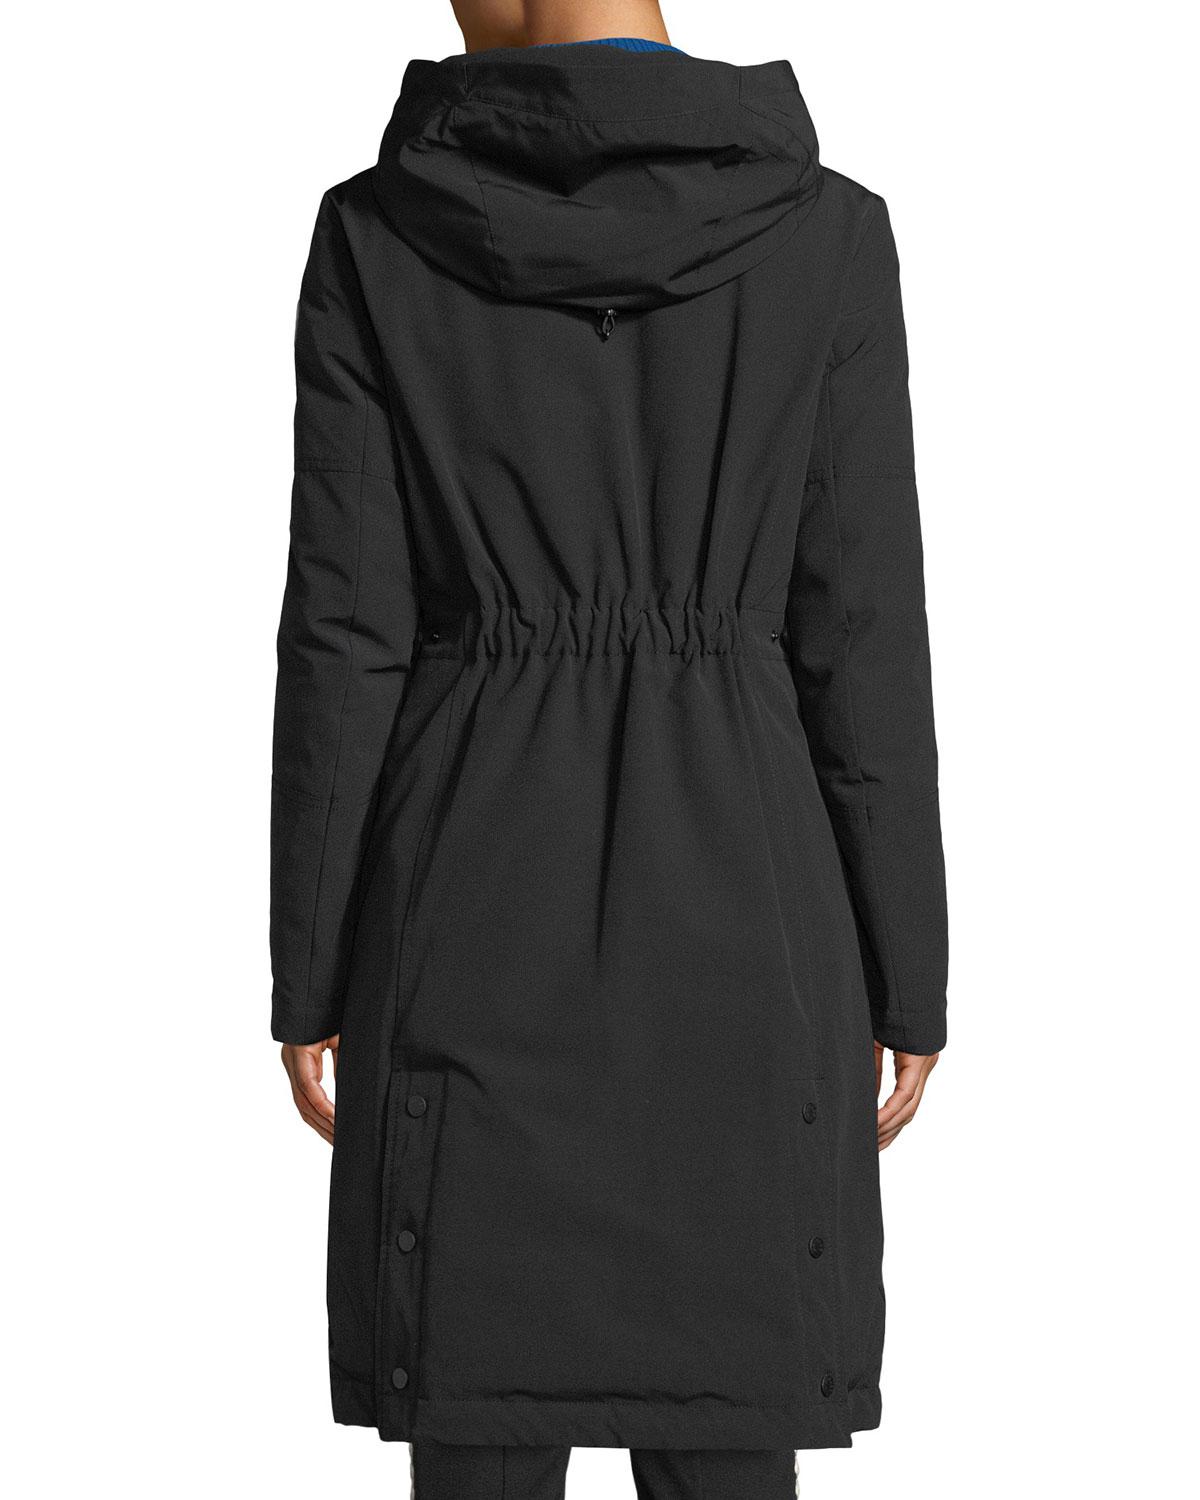 Jasseur Slim Parka Coat in Black 